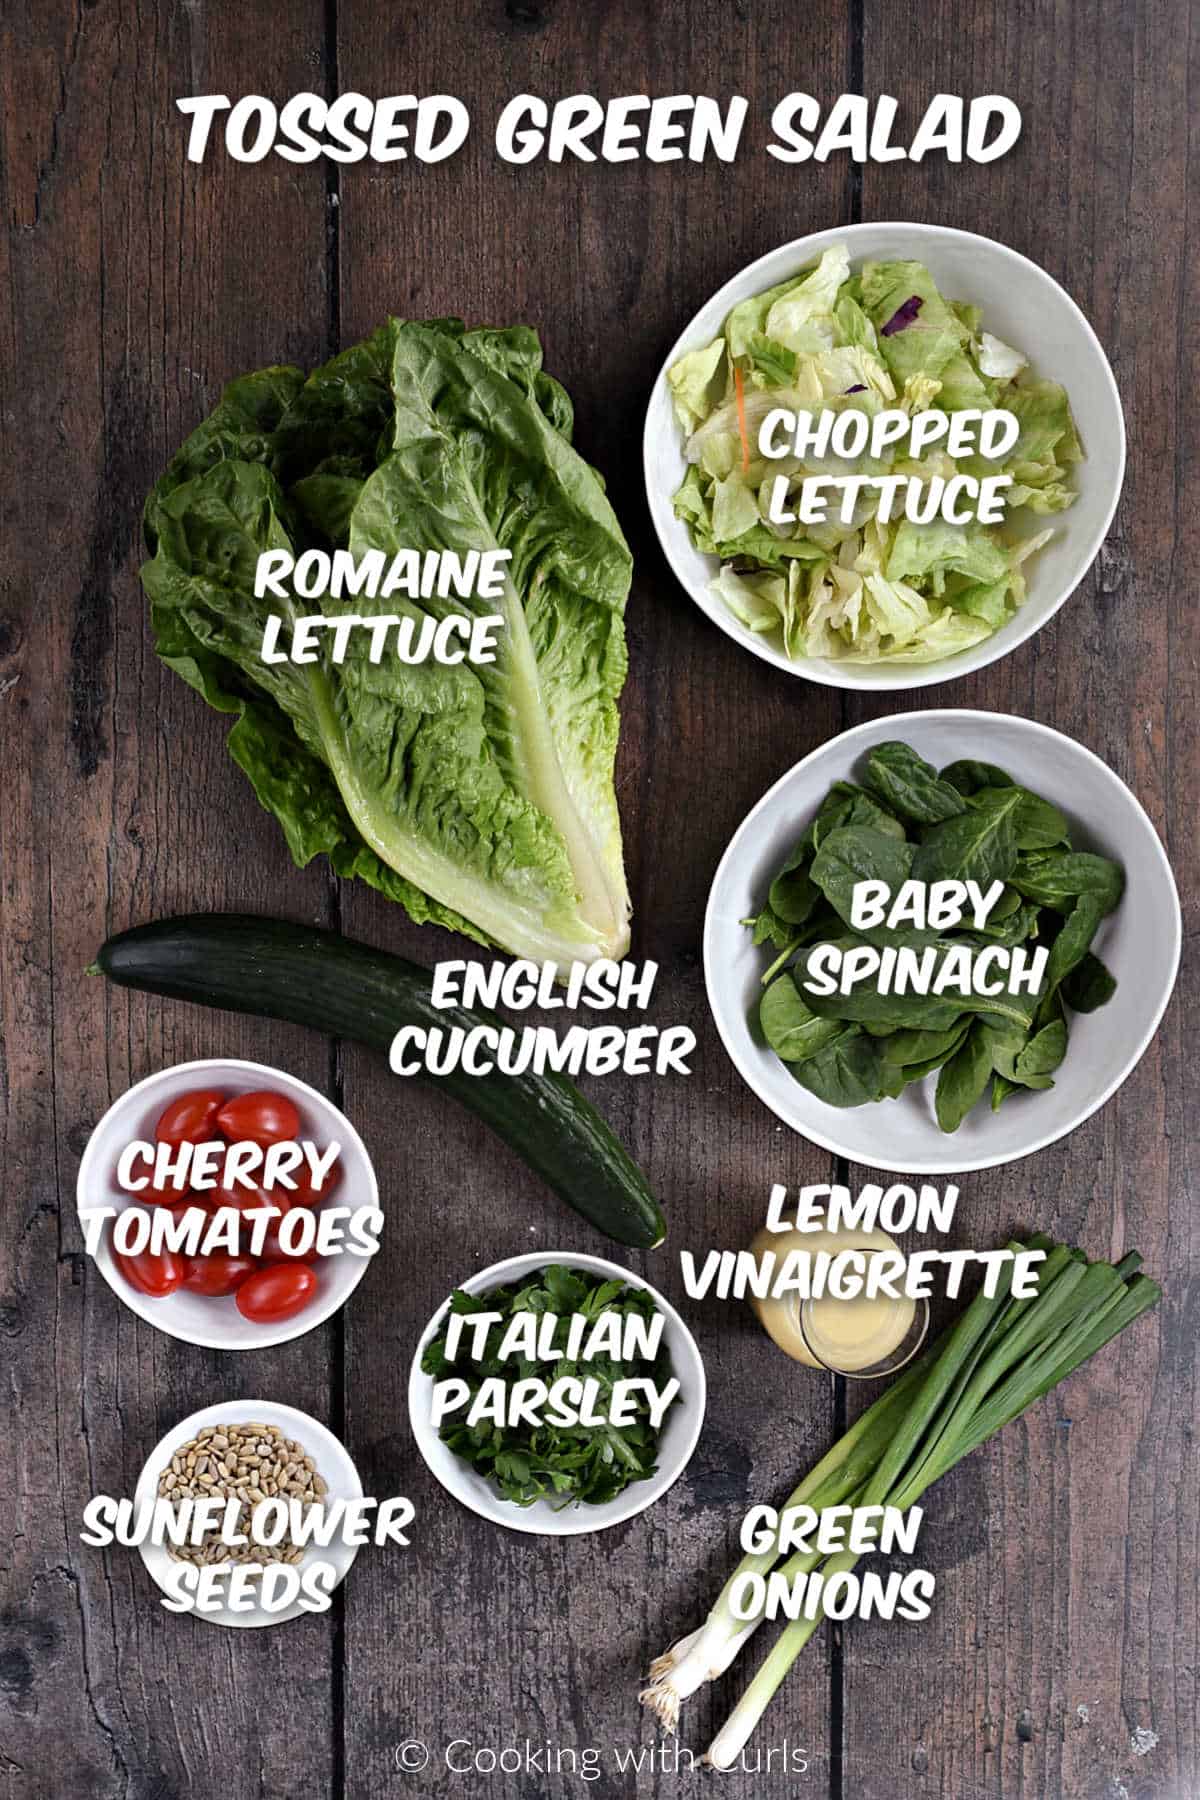 Ingredients-to-make-tossed-green-salad.